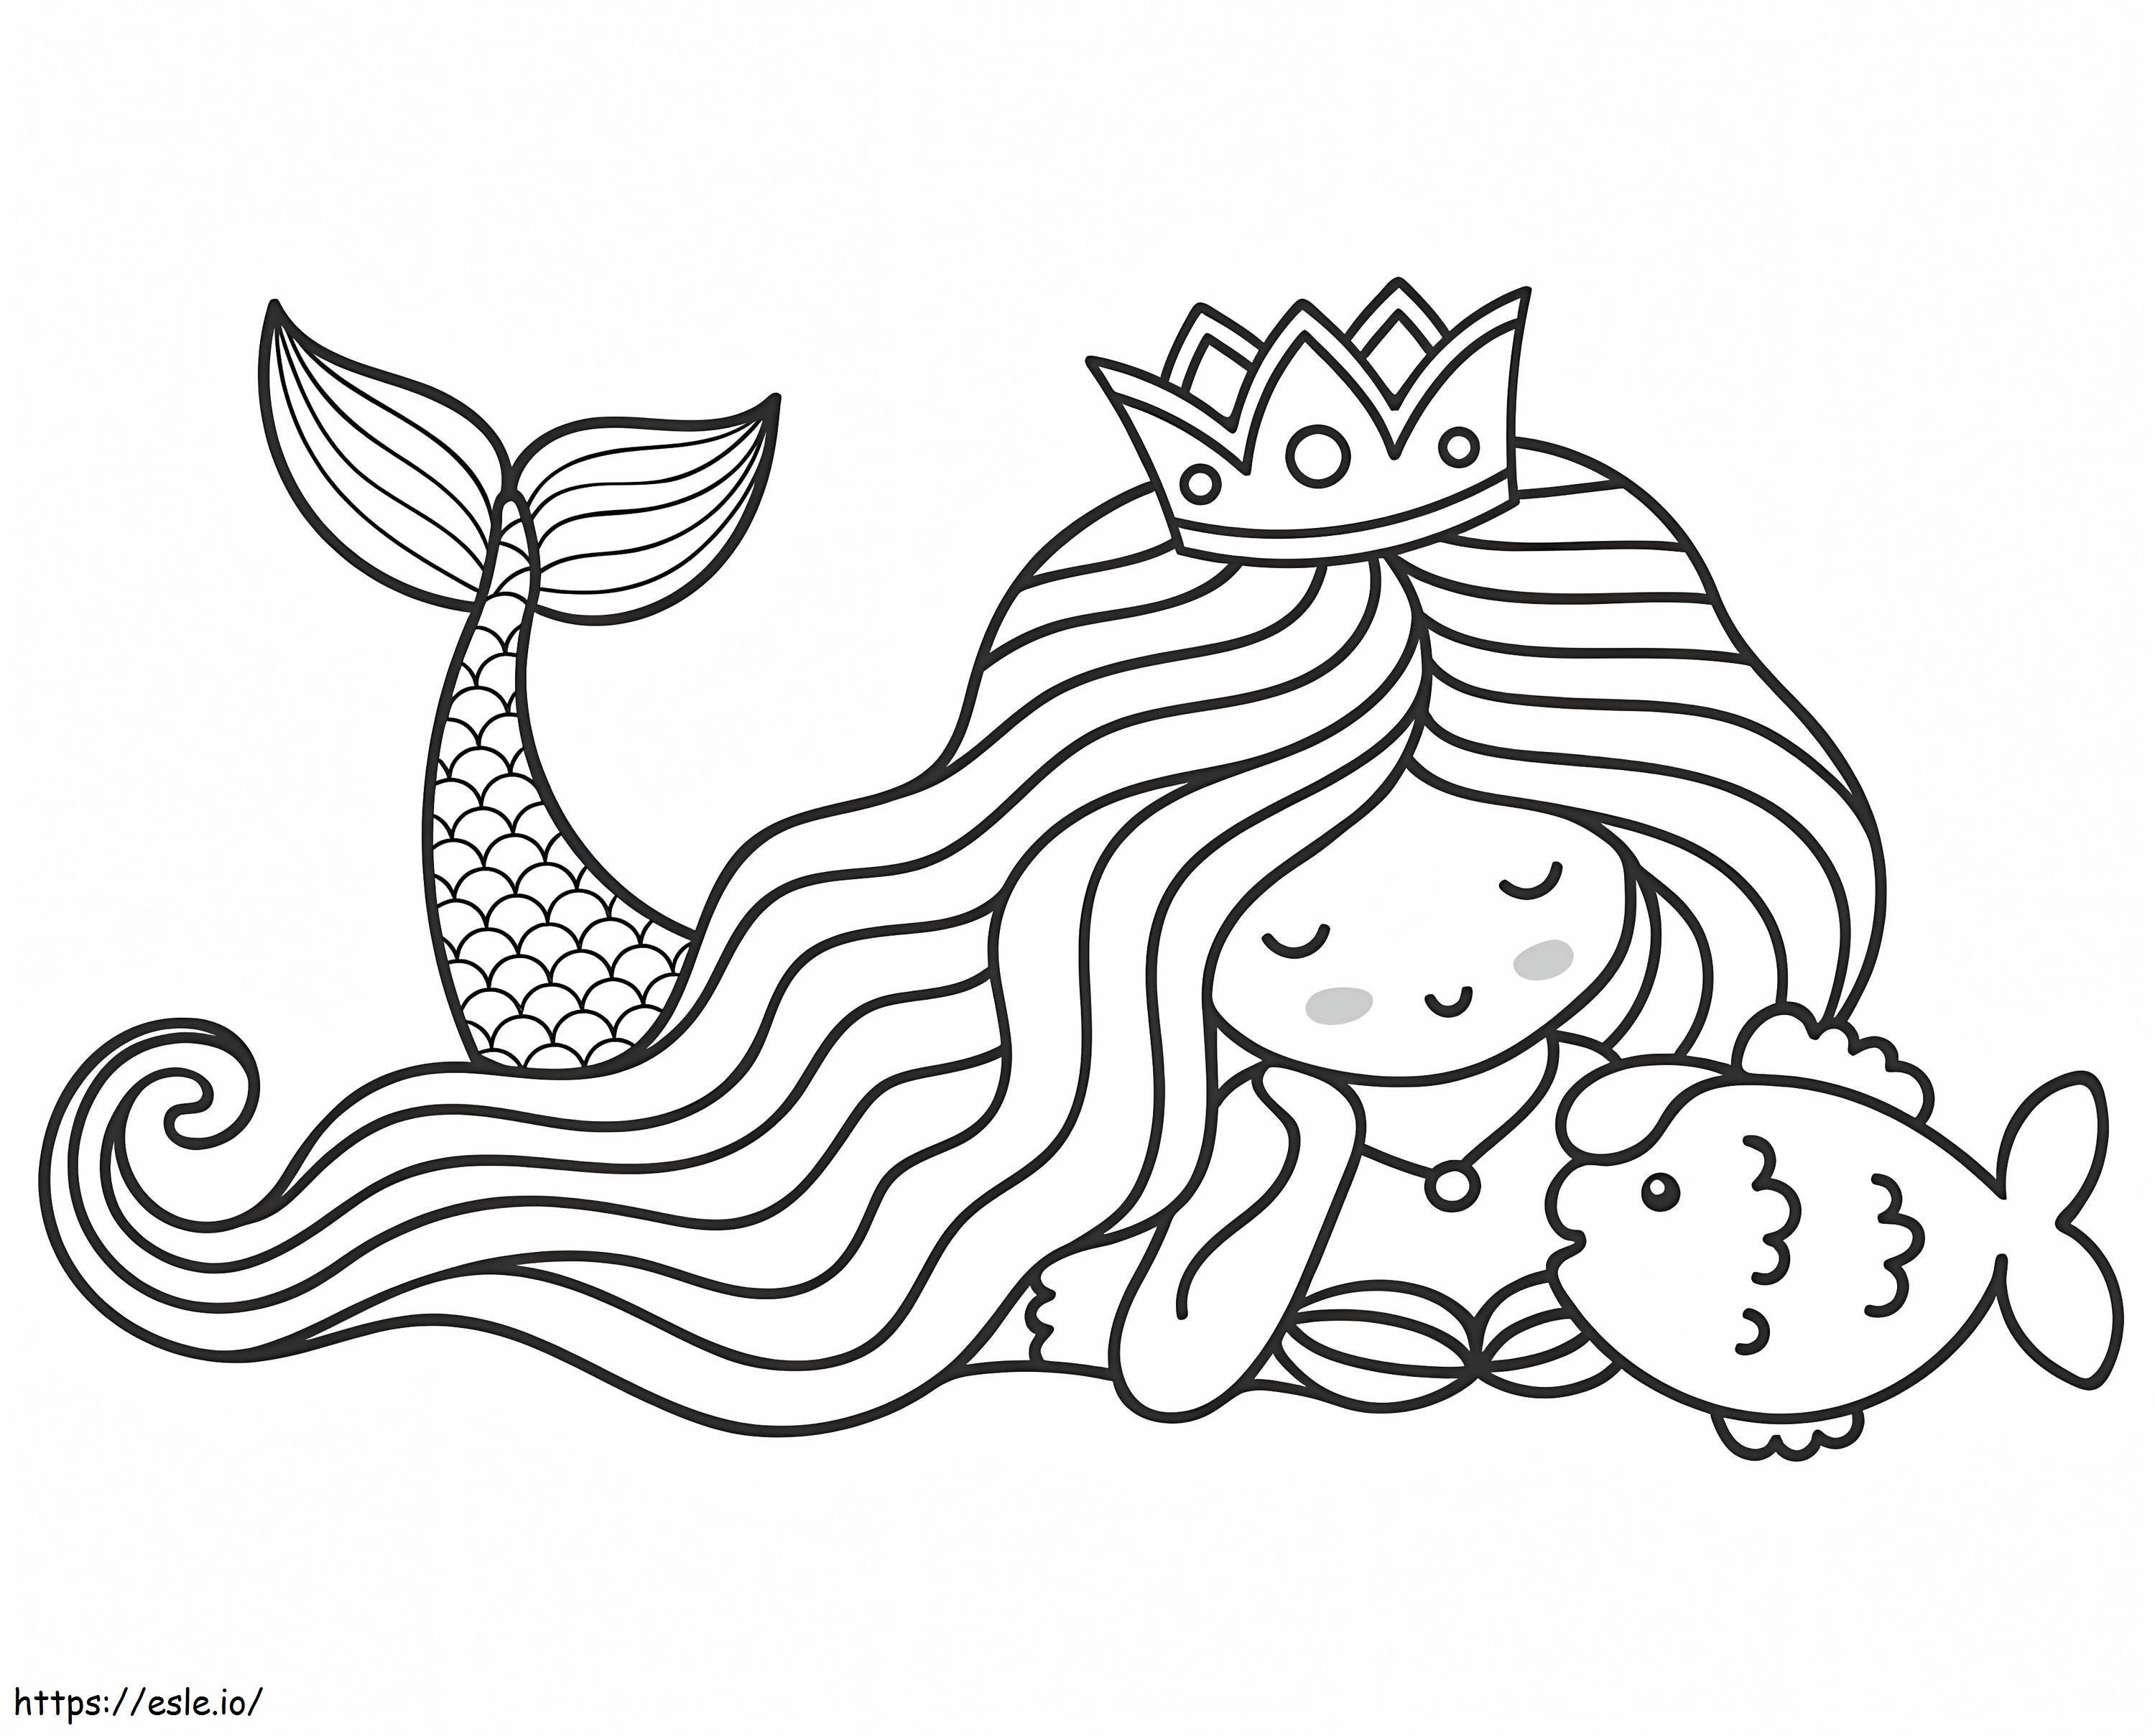 Mermaid And Fish coloring page